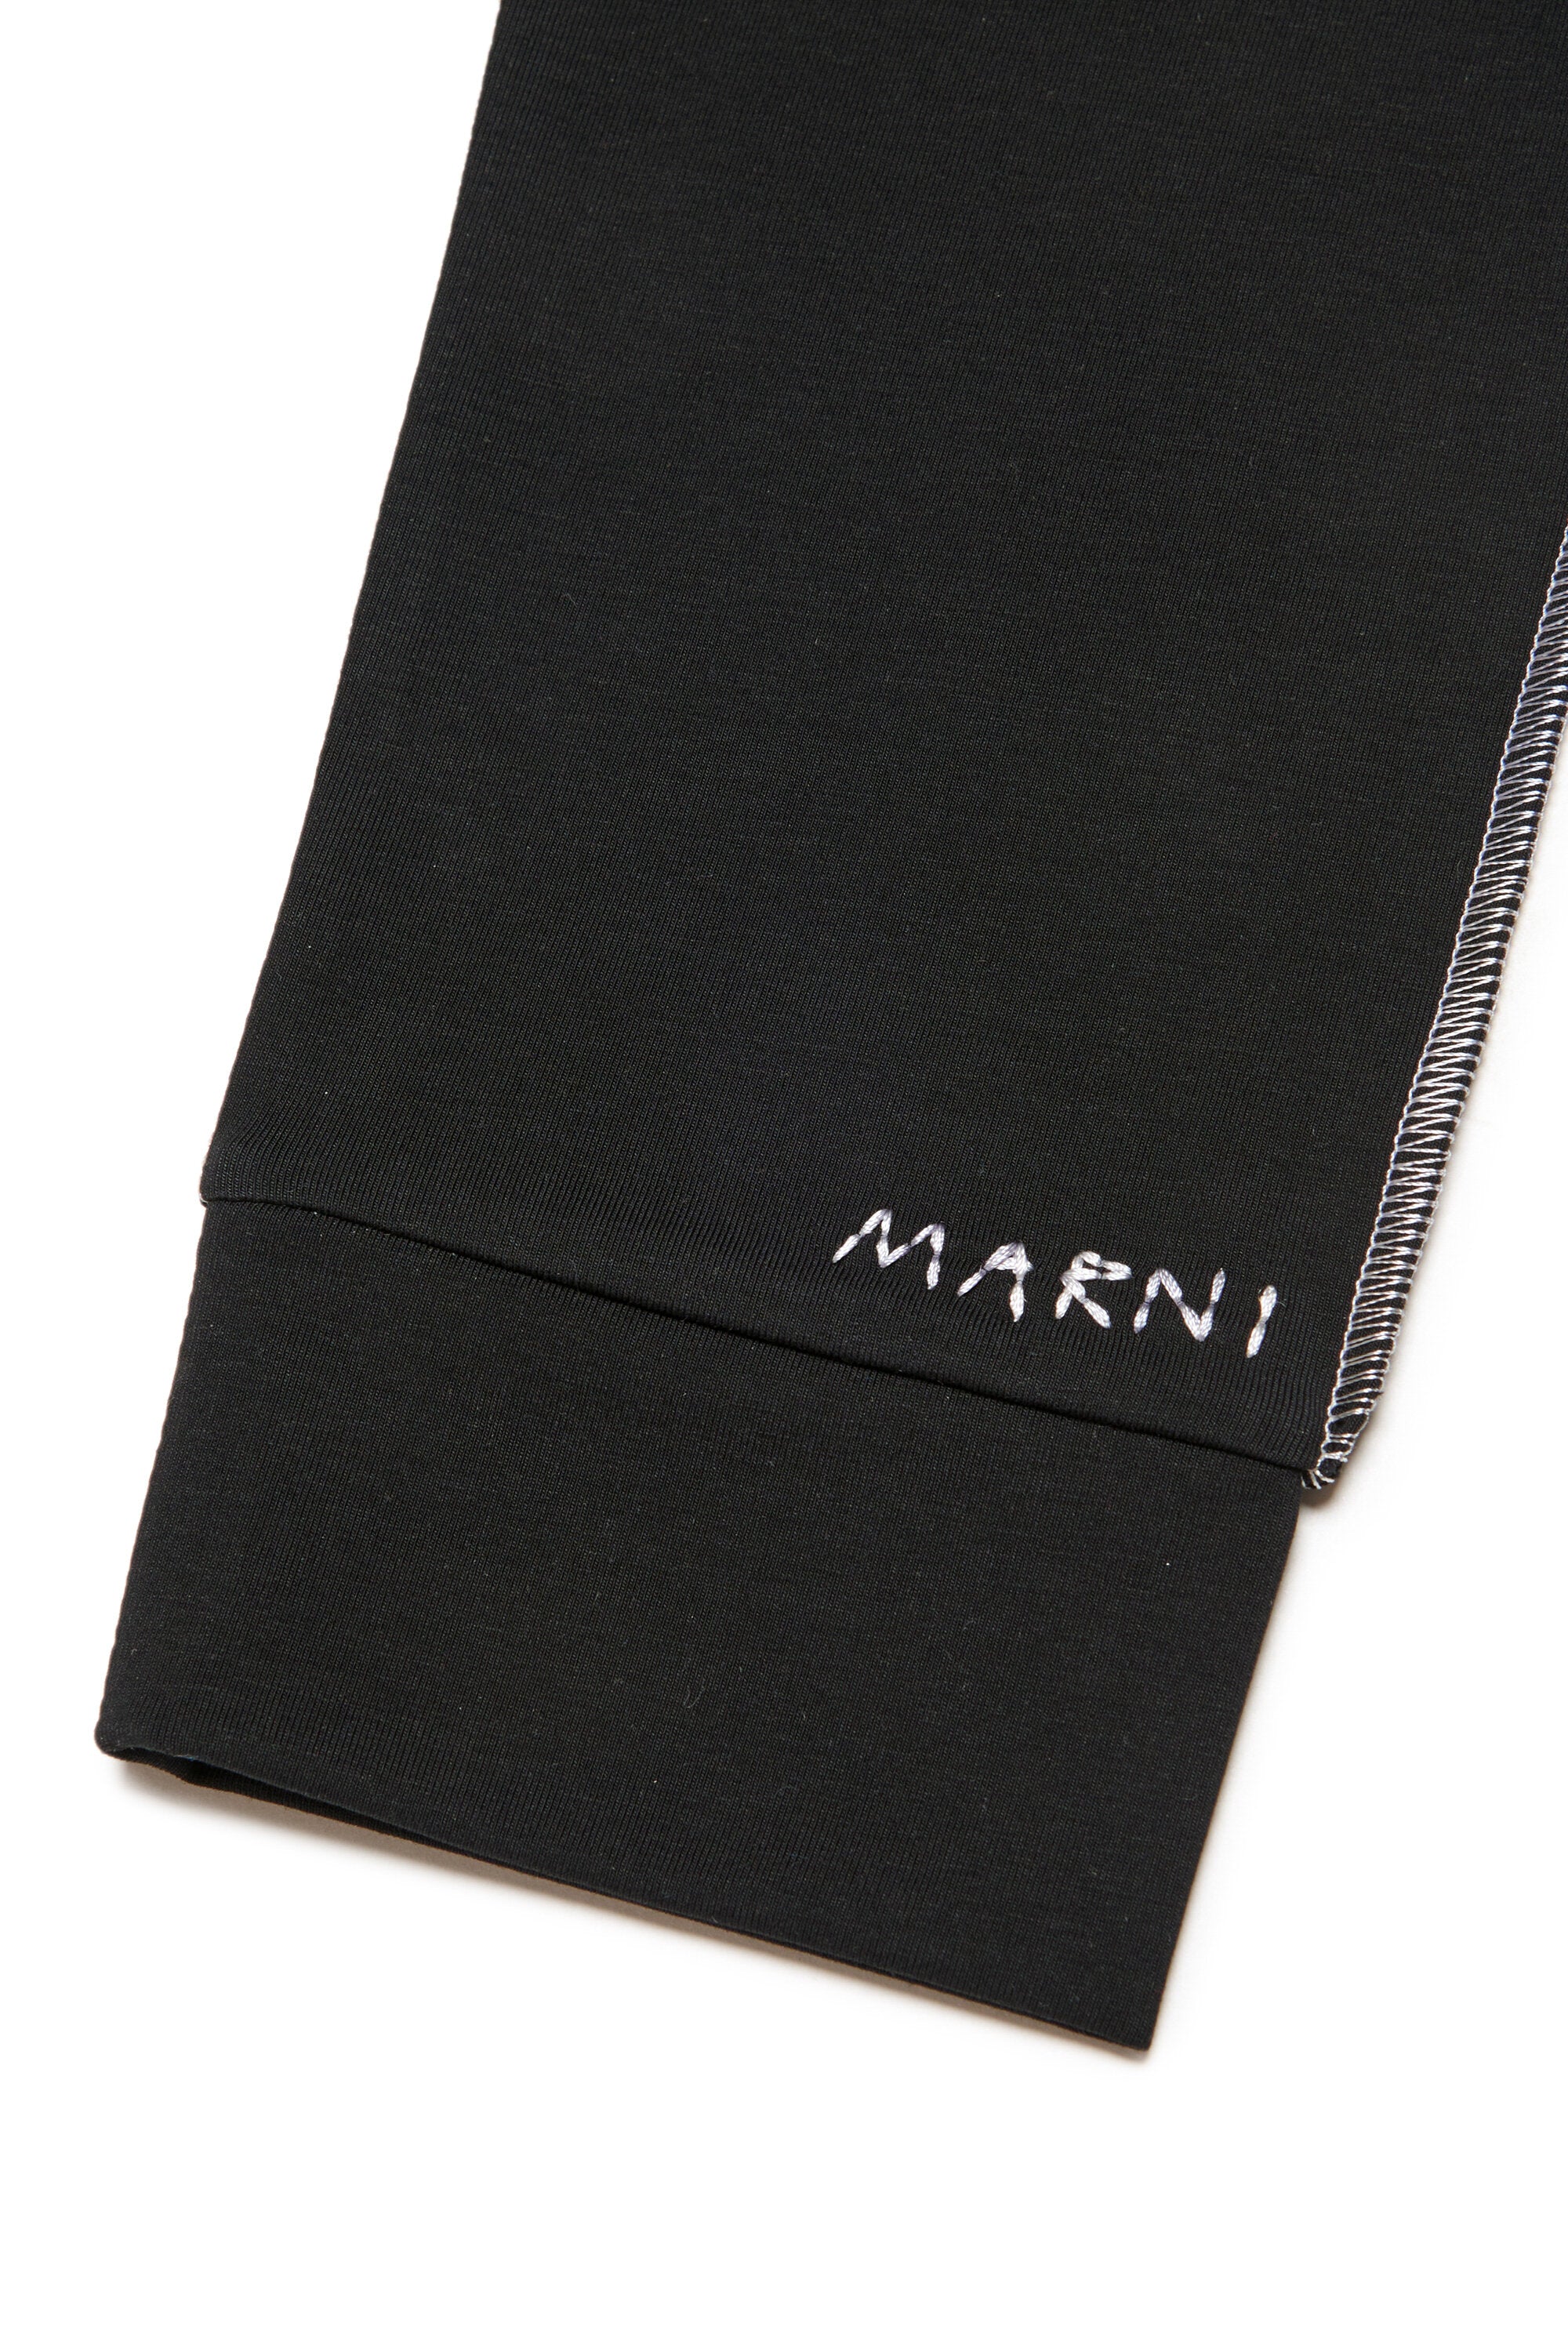 Marni girl's leggings pants with stitching